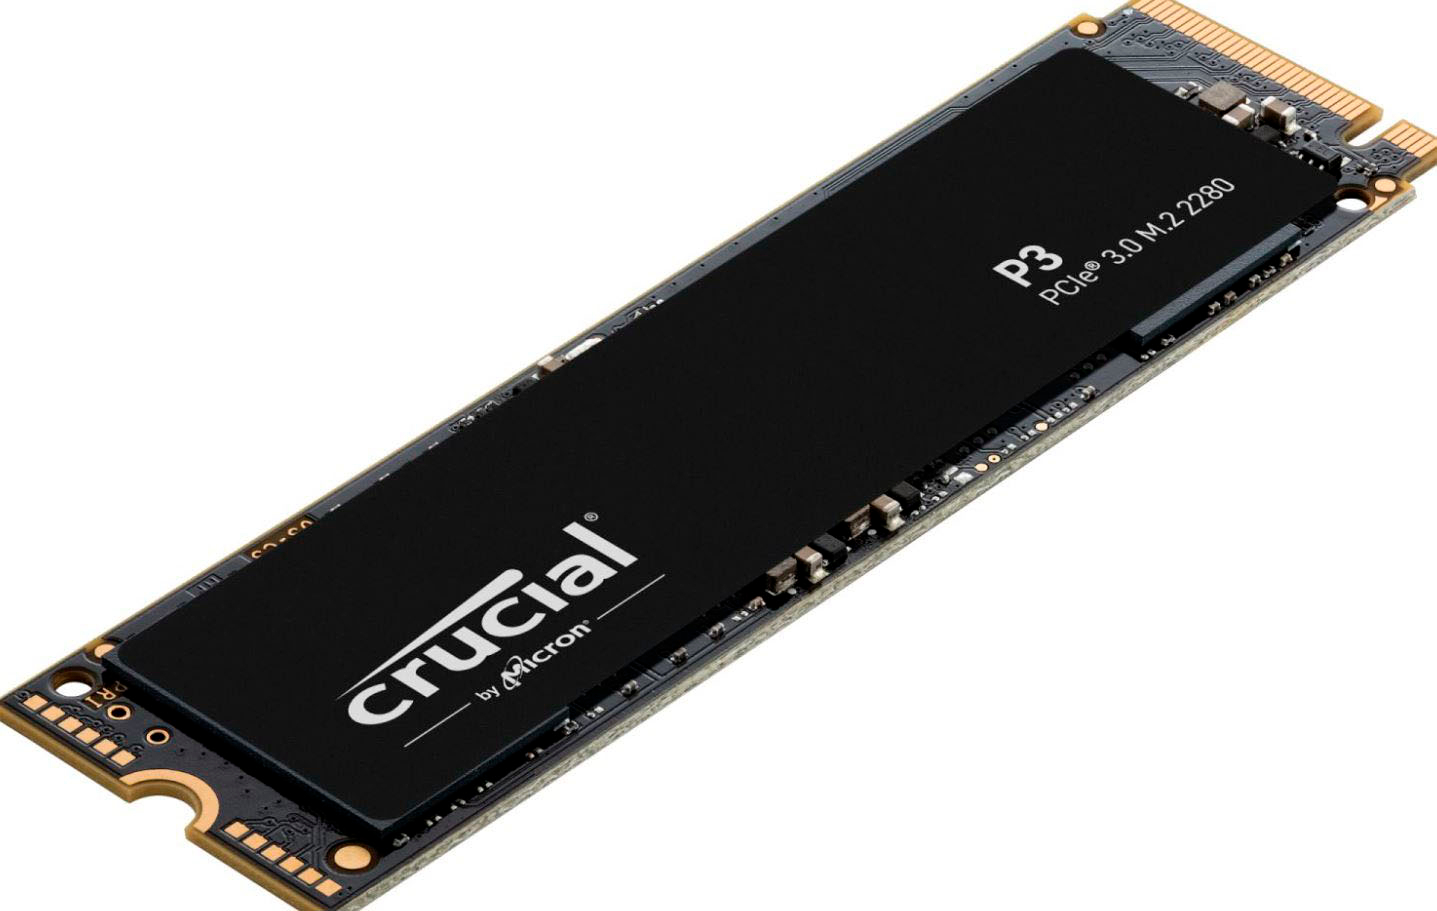 Crucial - P3 1TB Internal SSD PCIe Gen 3 x4  NVMe